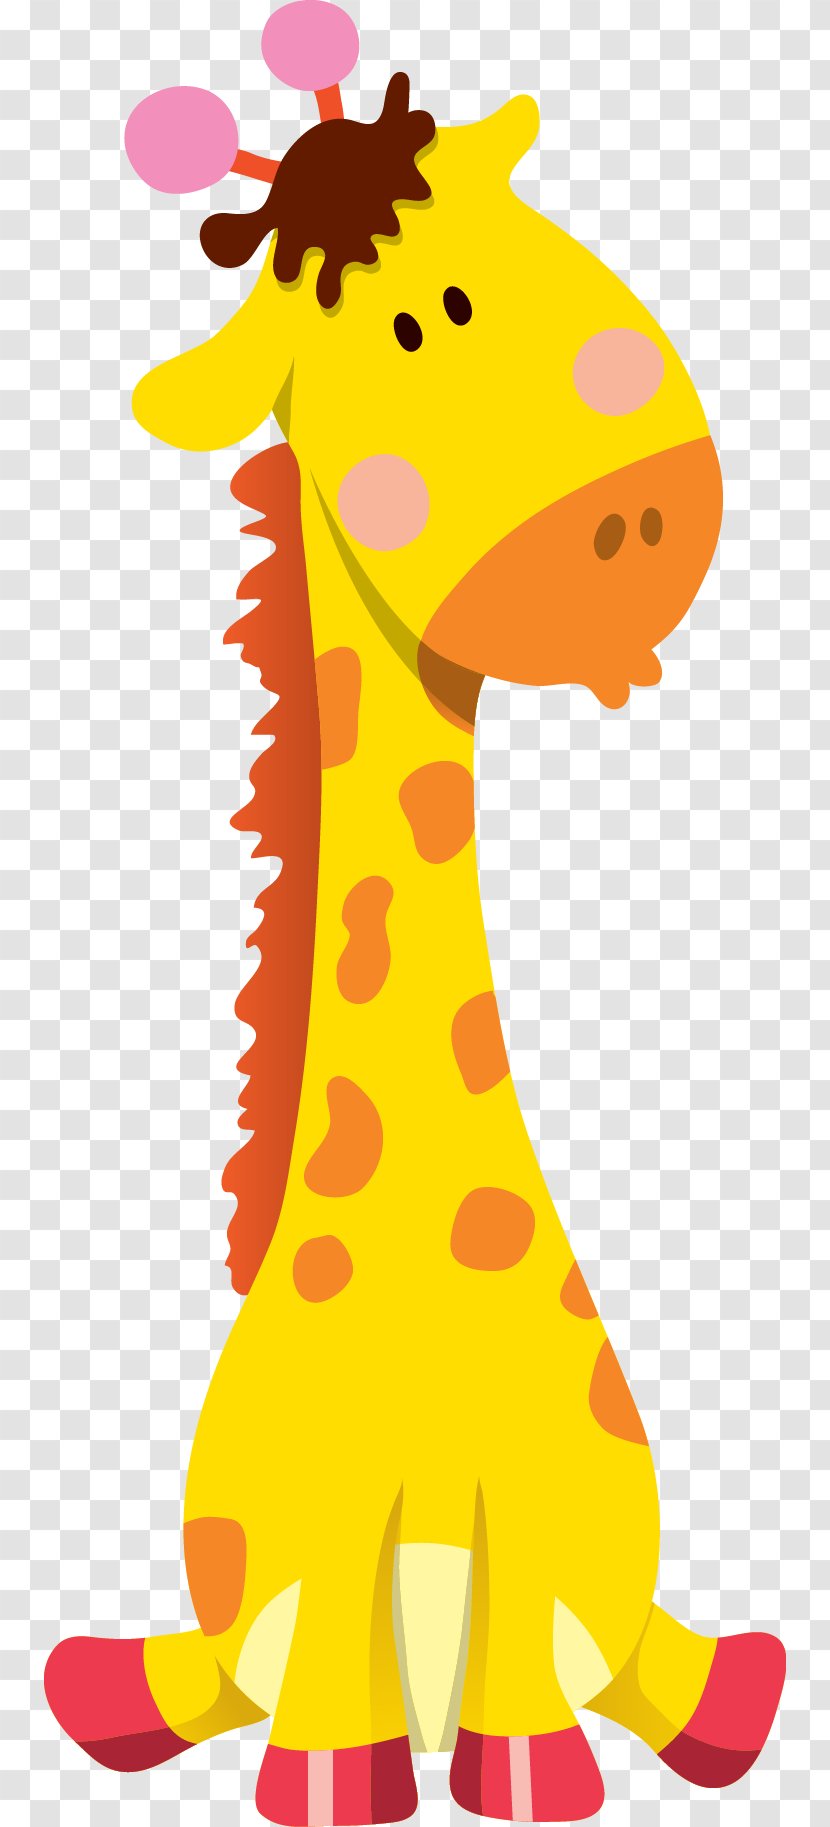 Giraffe Cartoon Animal Illustration - Organism Transparent PNG